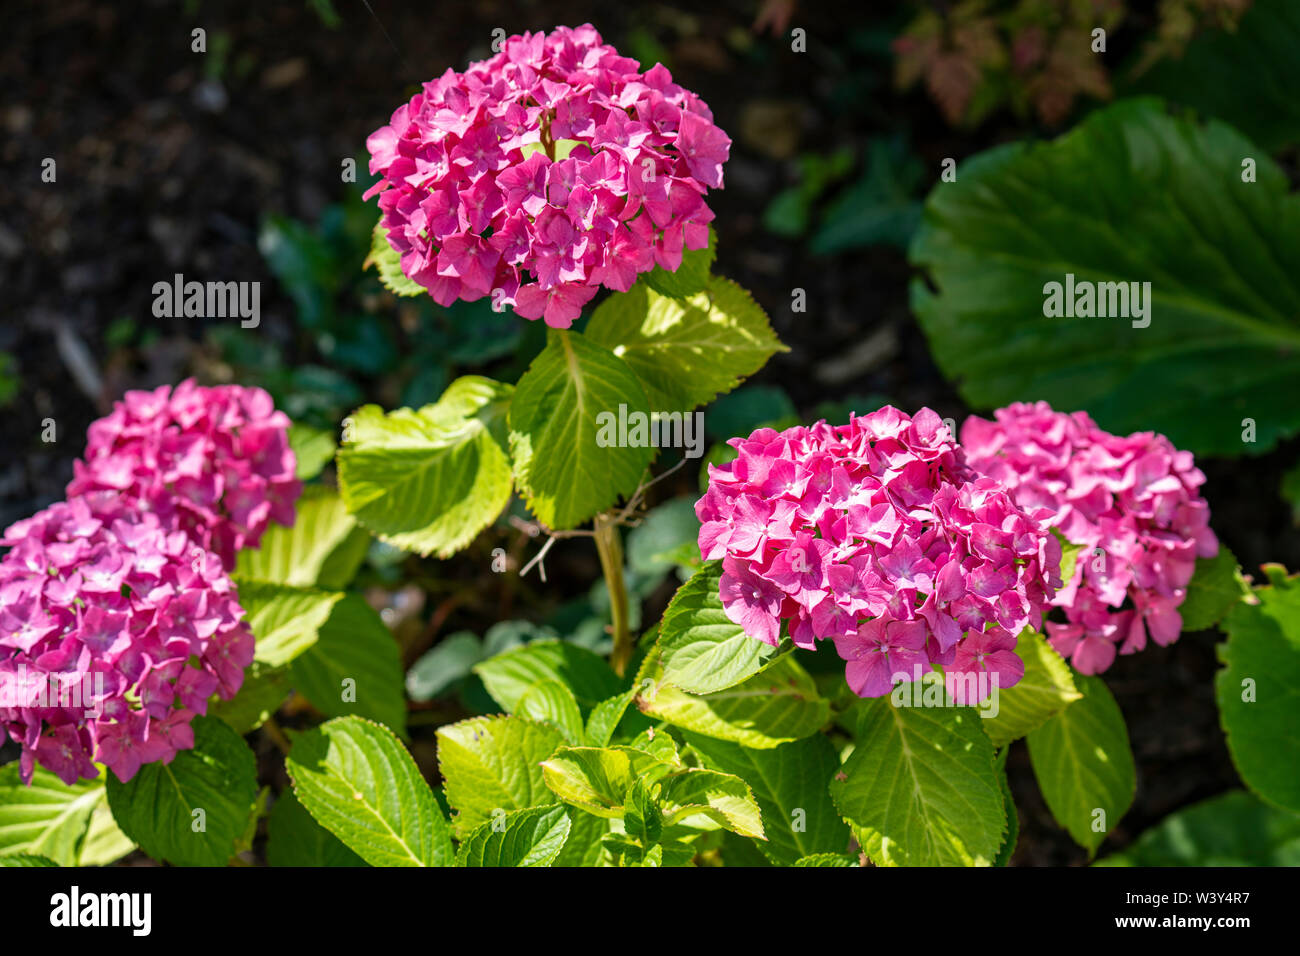 Schöne lila, Violette Blumen ; Hortensien Foto de stock